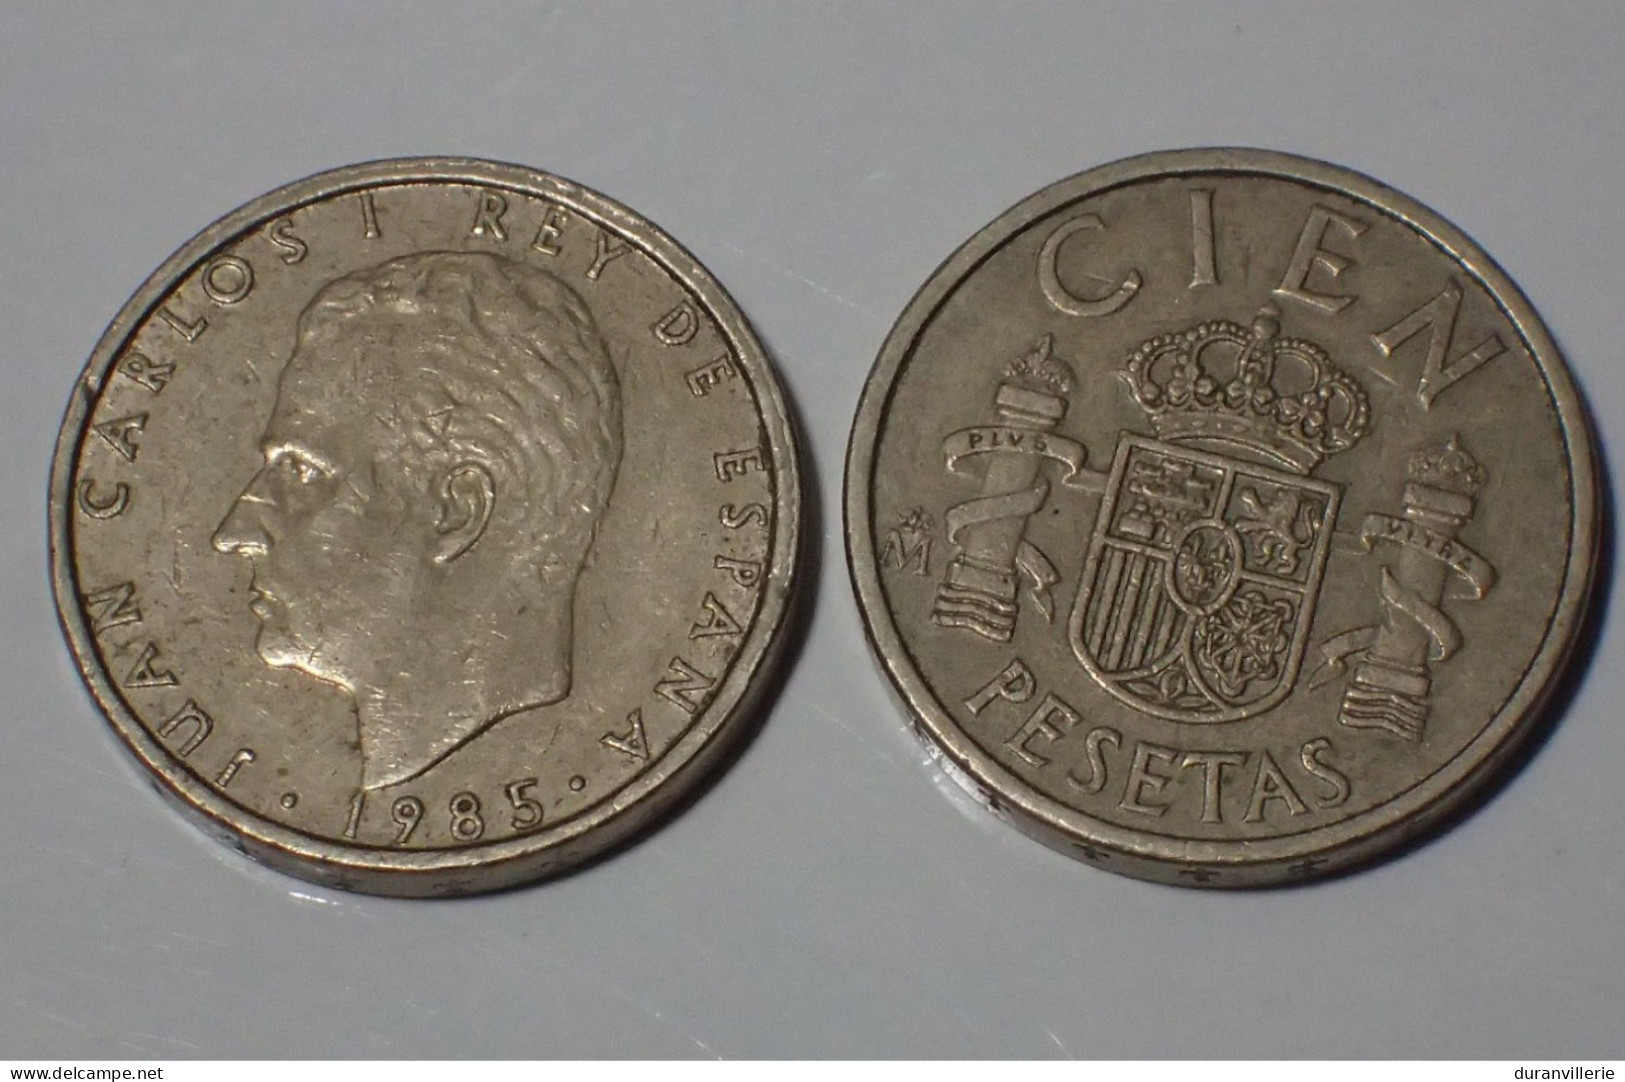 Spagna - Spain - Espana - Spanien 1985 - 100 Pesetas, KM 826 - 100 Peseta